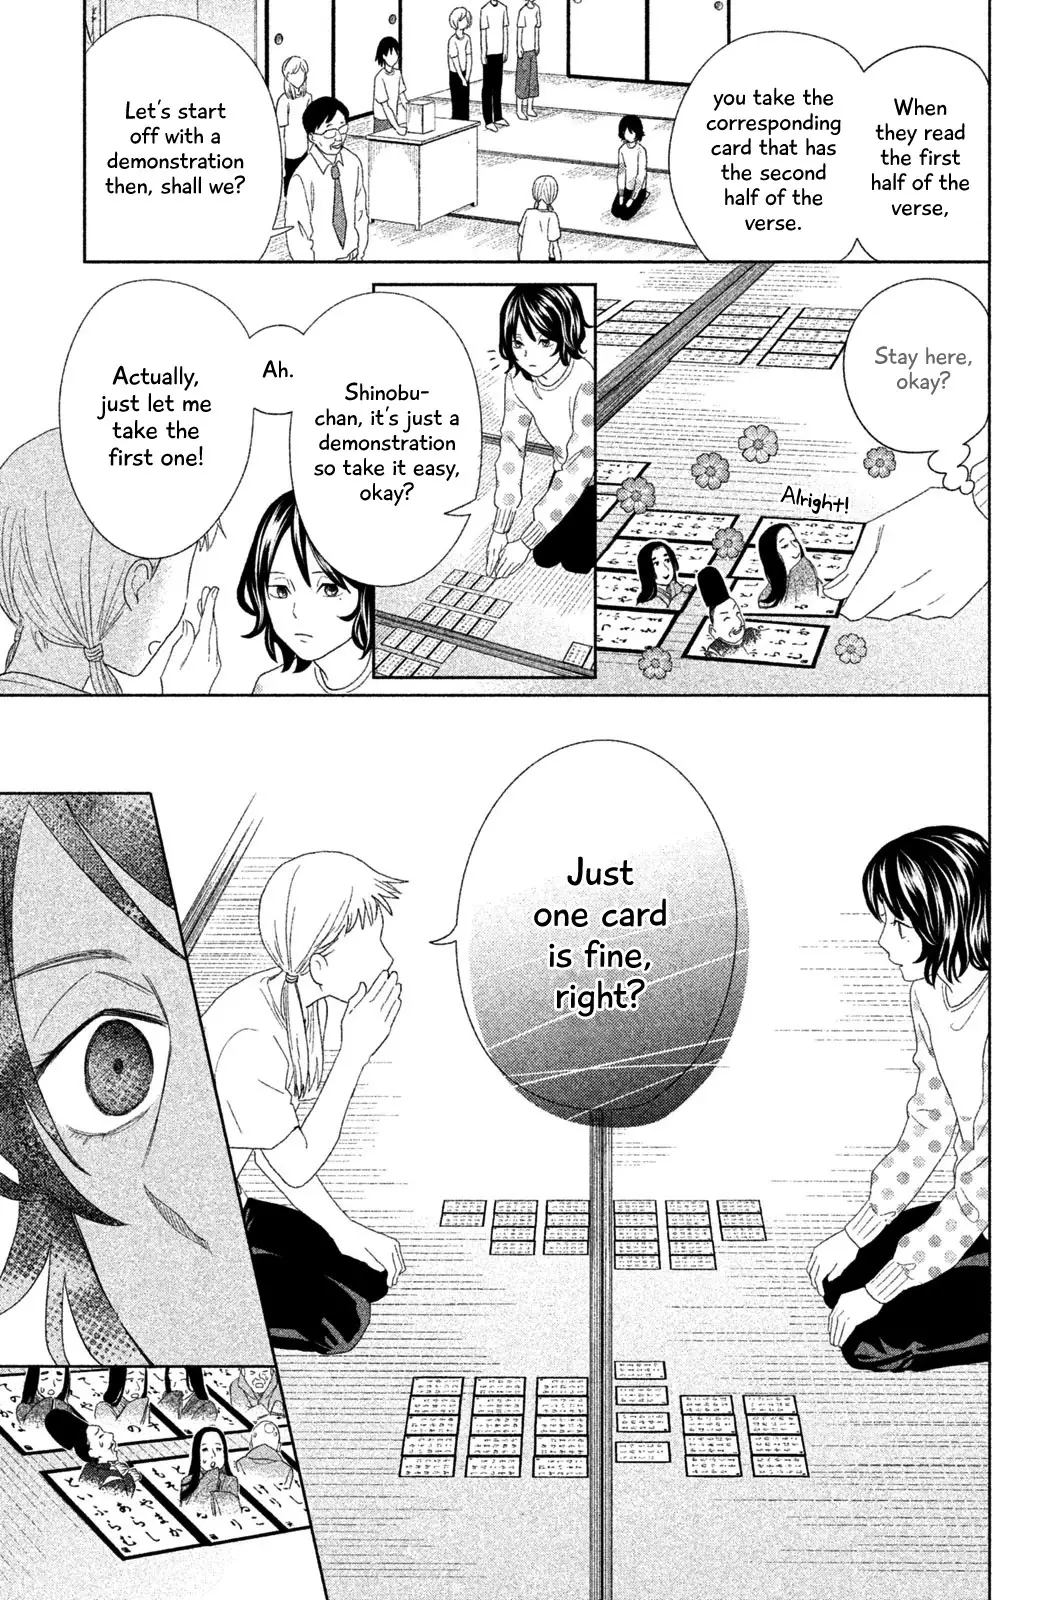 Chihayafuru: Middle School Arc - 11 page 20